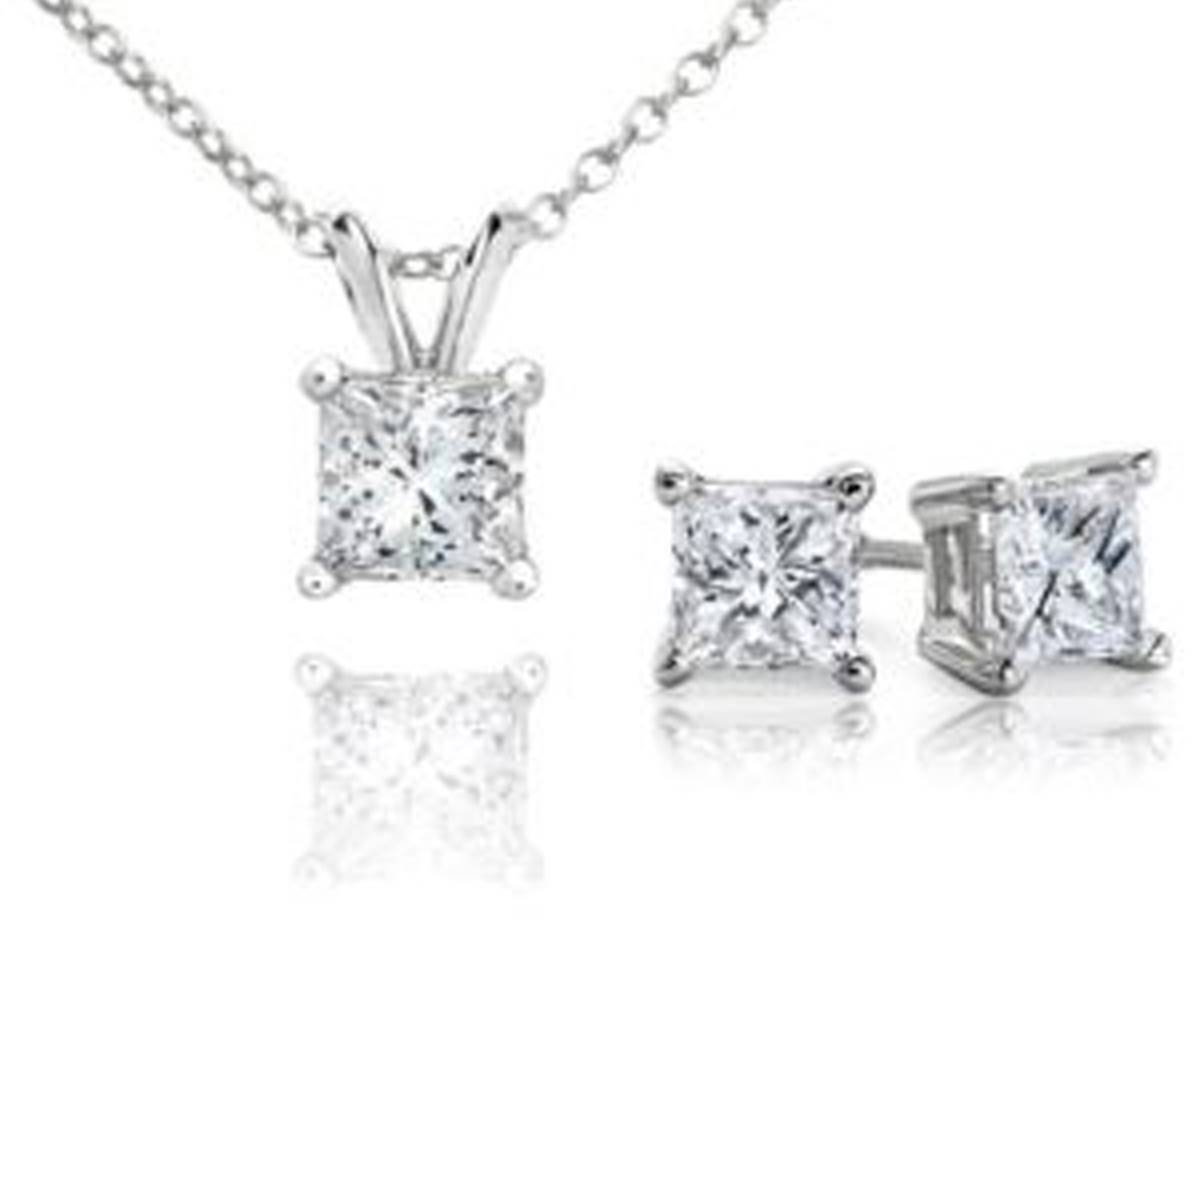 Parikhs 14kt. White Gold Princess Cut Diamond Set